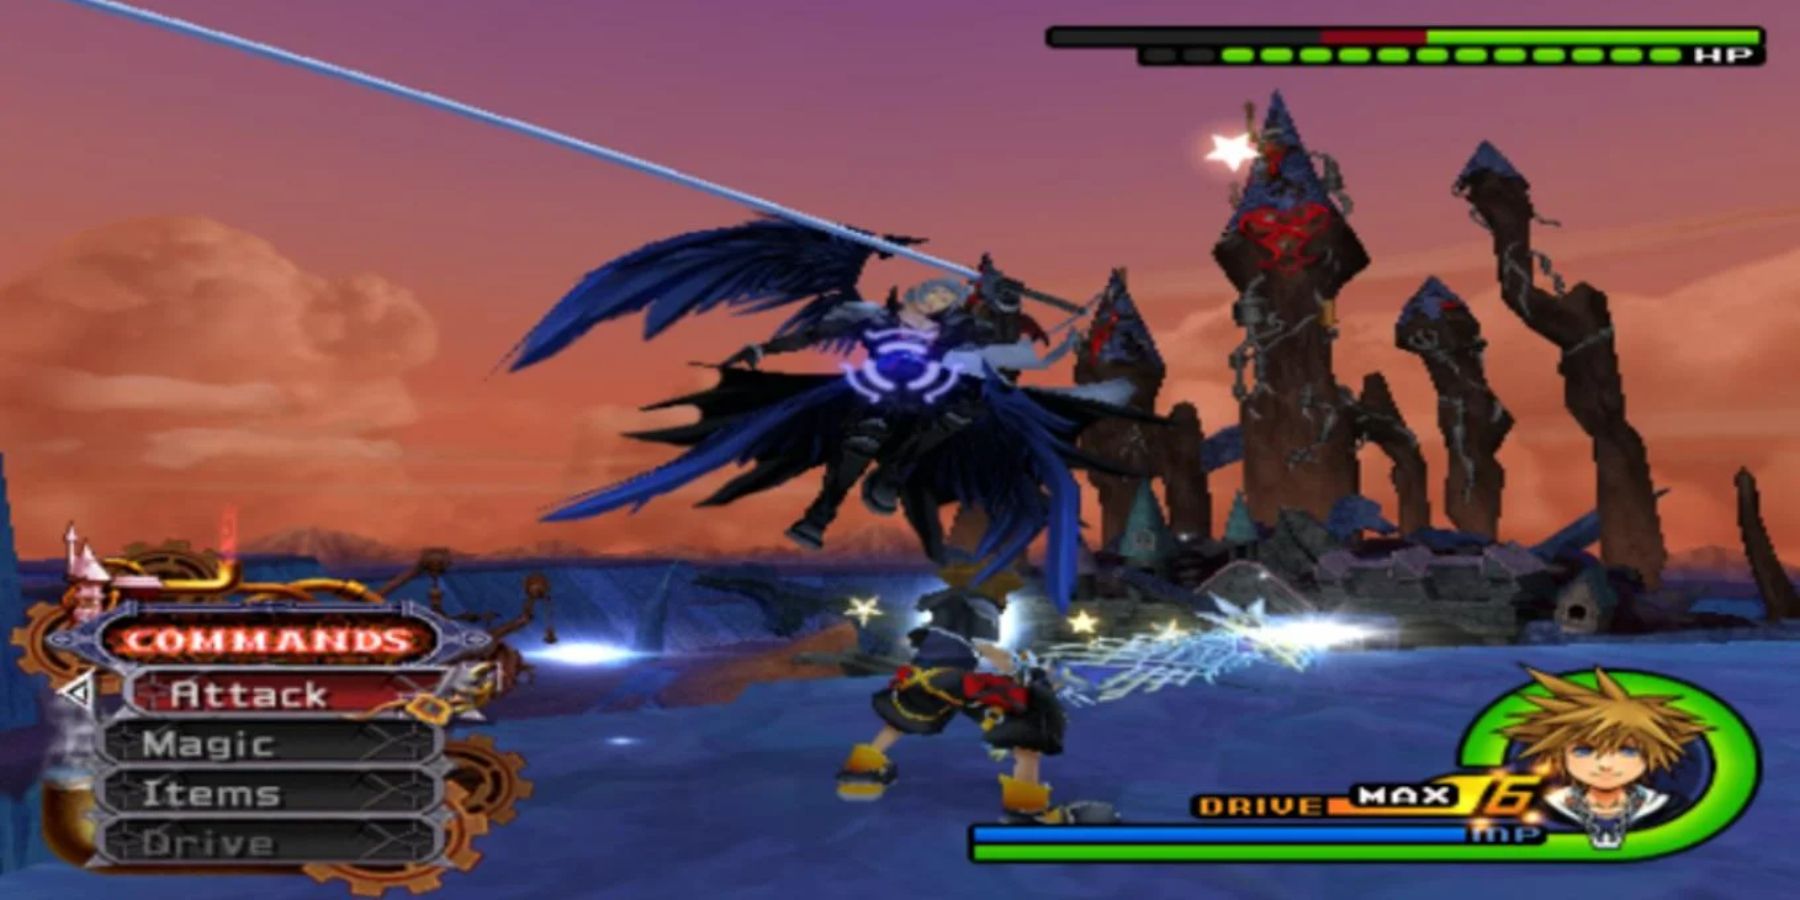 Sora fights Sephiroth in Kingdom Hearts 2